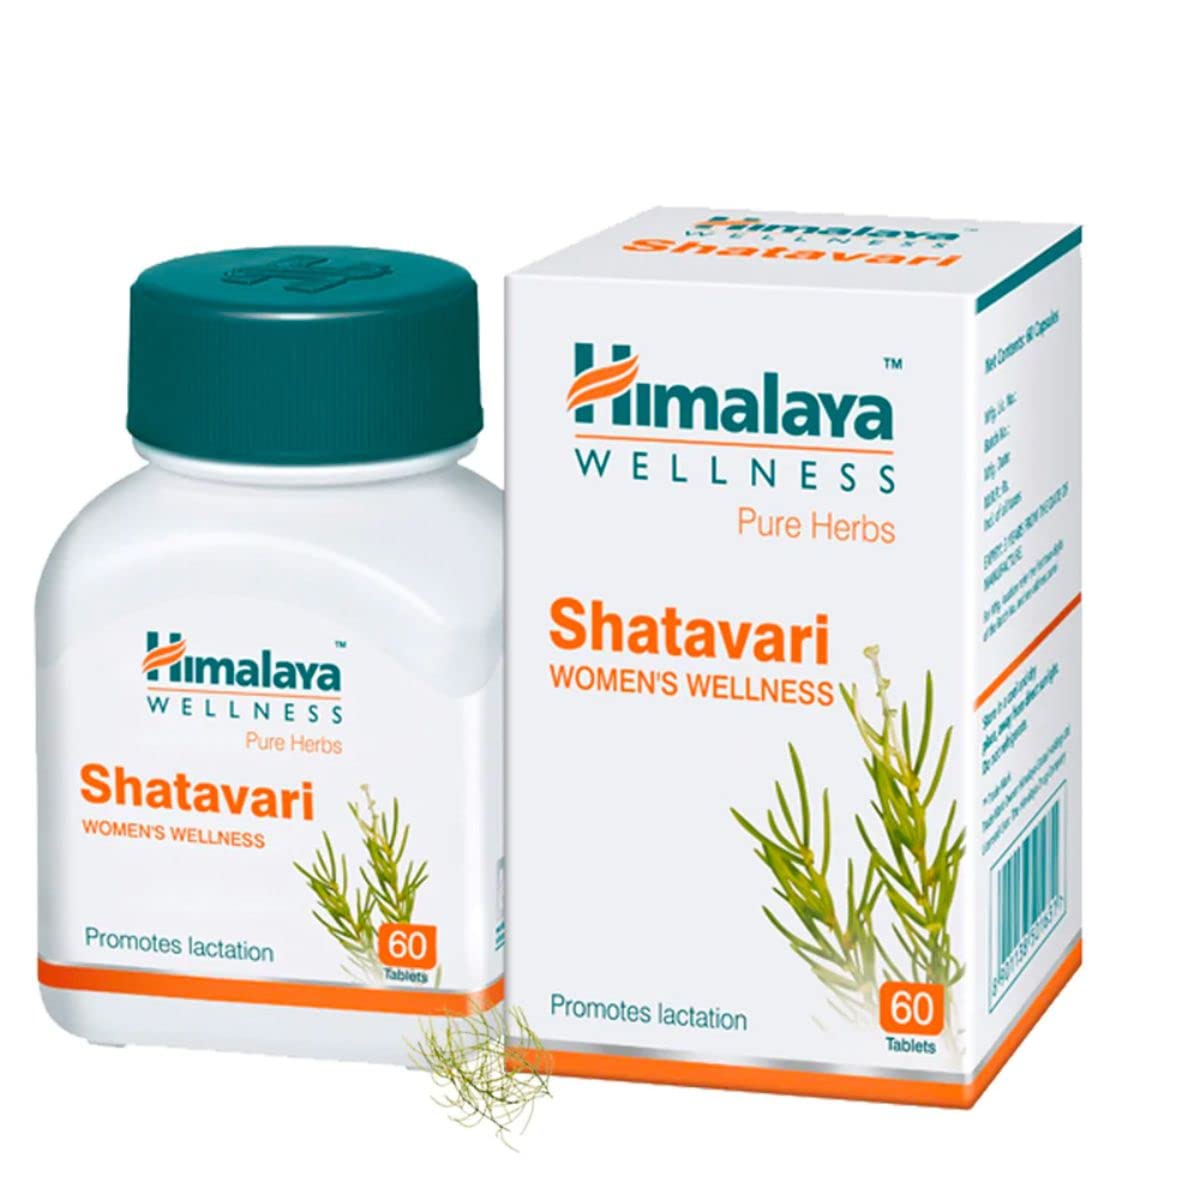 Himalaya Wellness Pure Herbs Shatavari Women's Wellness Tablet